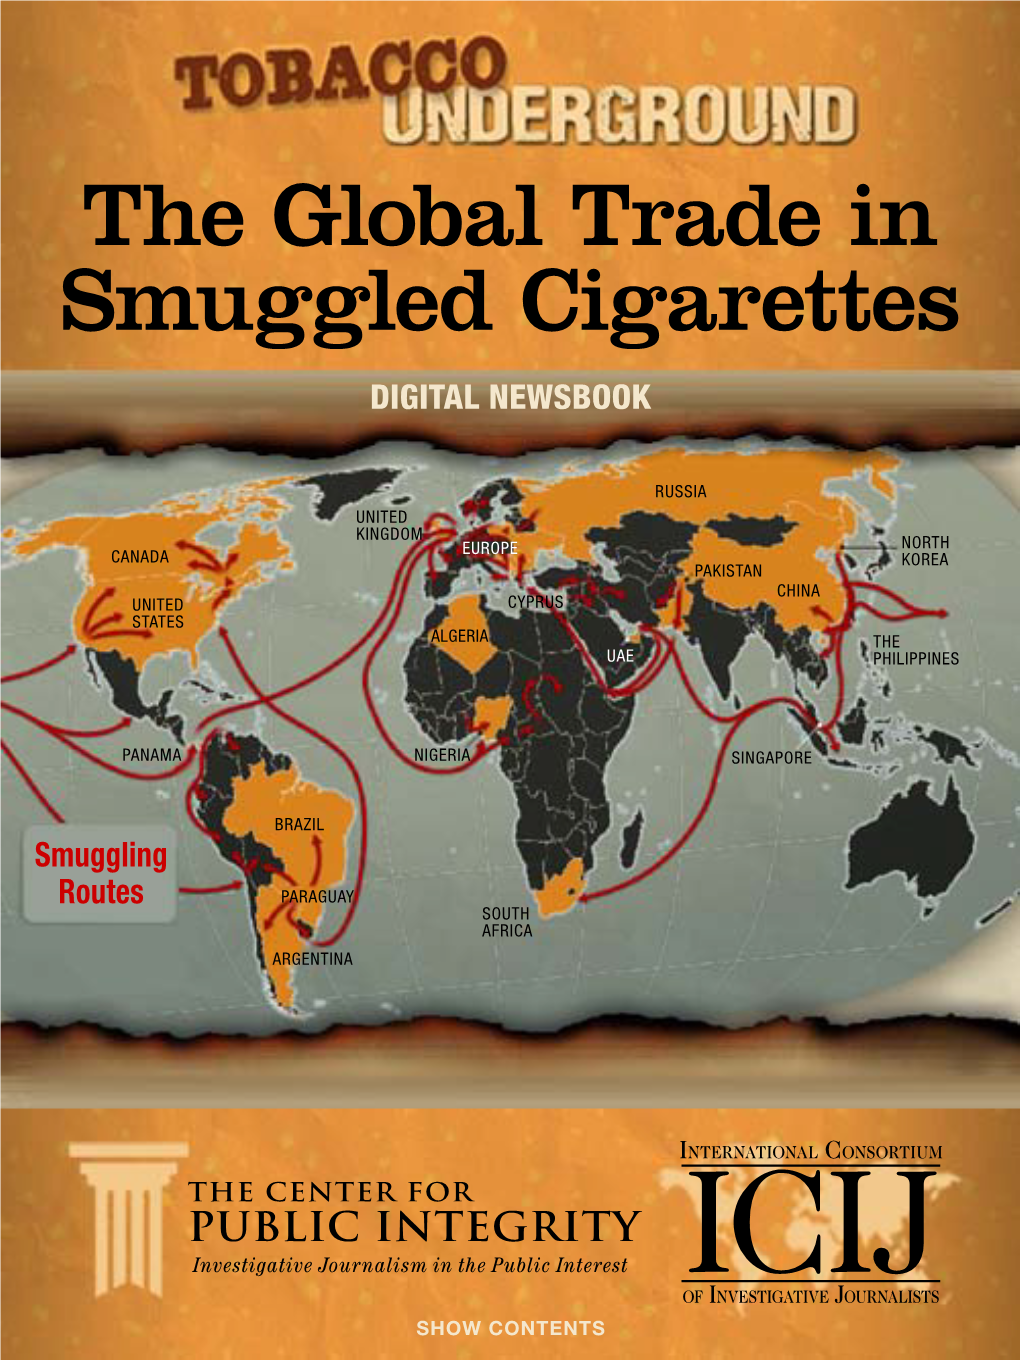 The Global Trade in Smuggled Cigarettes DIGITAL NEWSBOOK